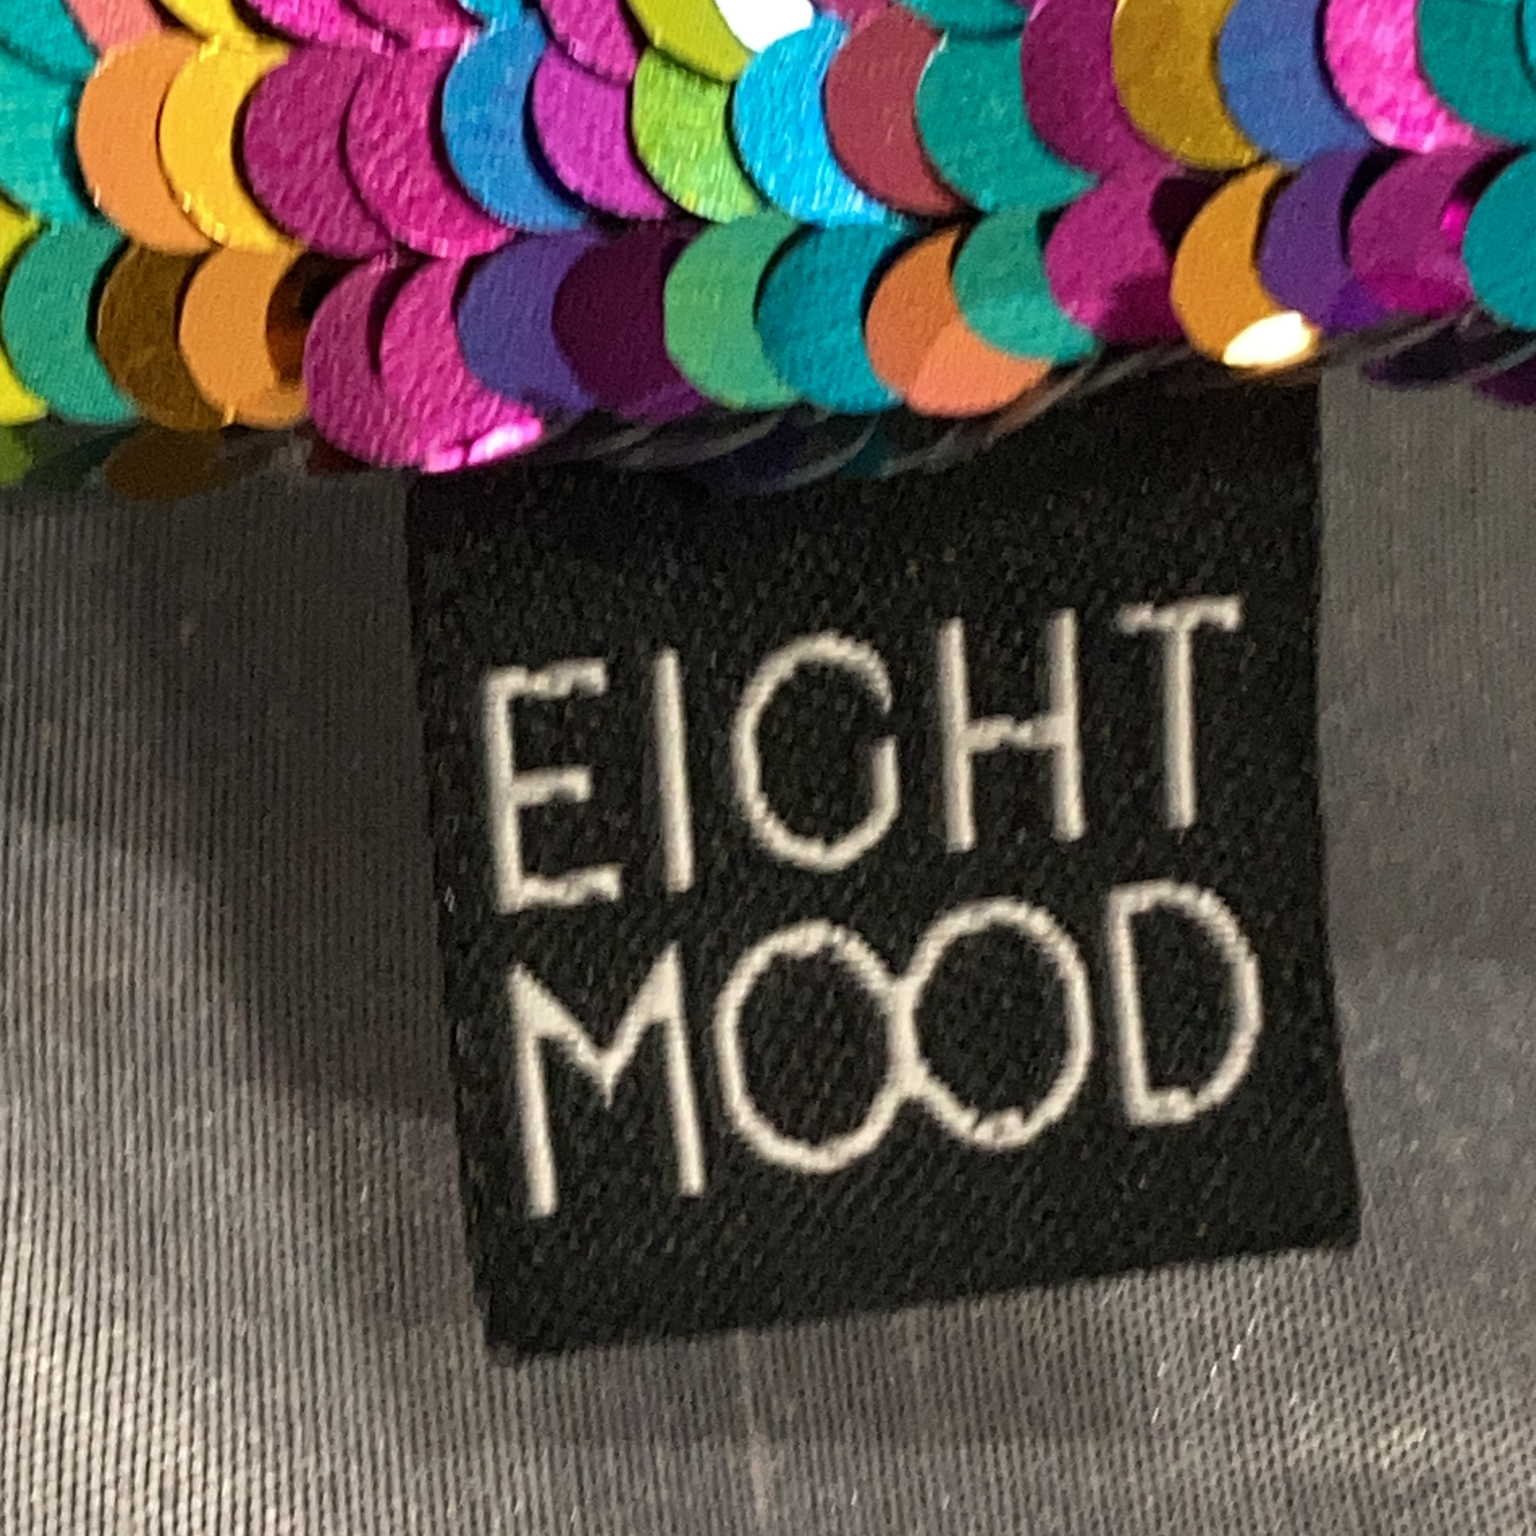 Eight Mood